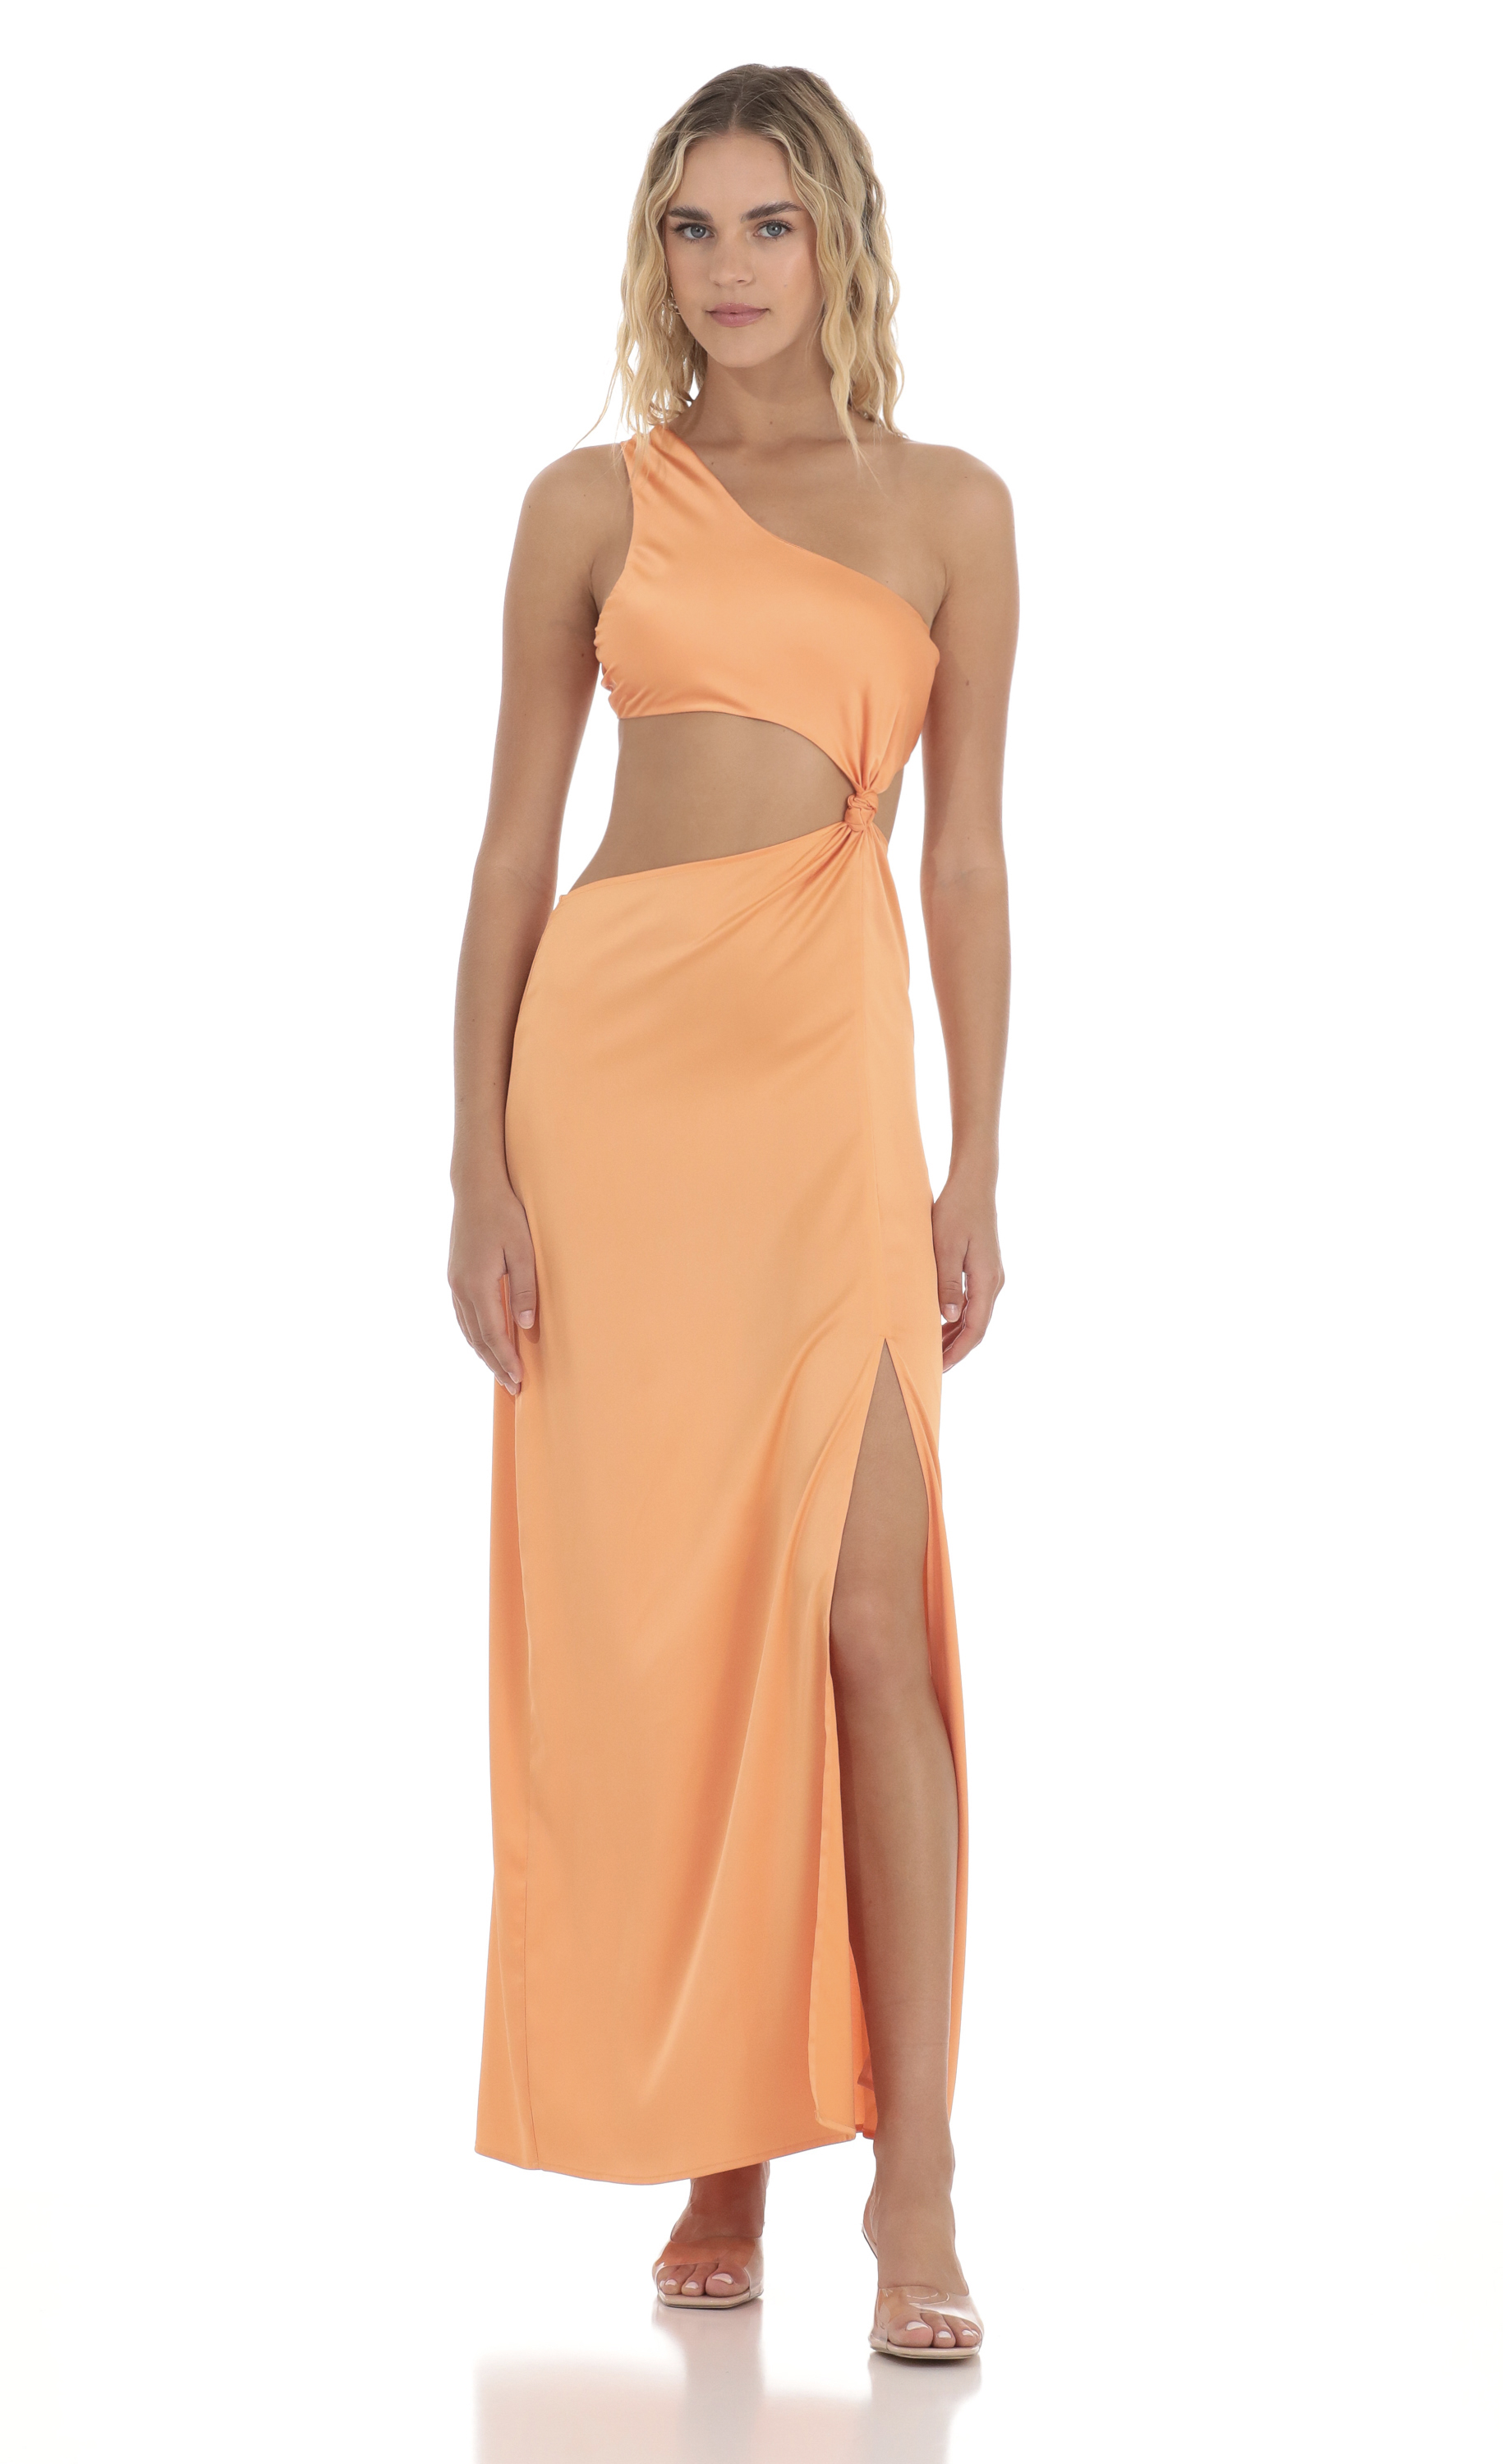 Satin One Shoulder Cutout Dress in Orange